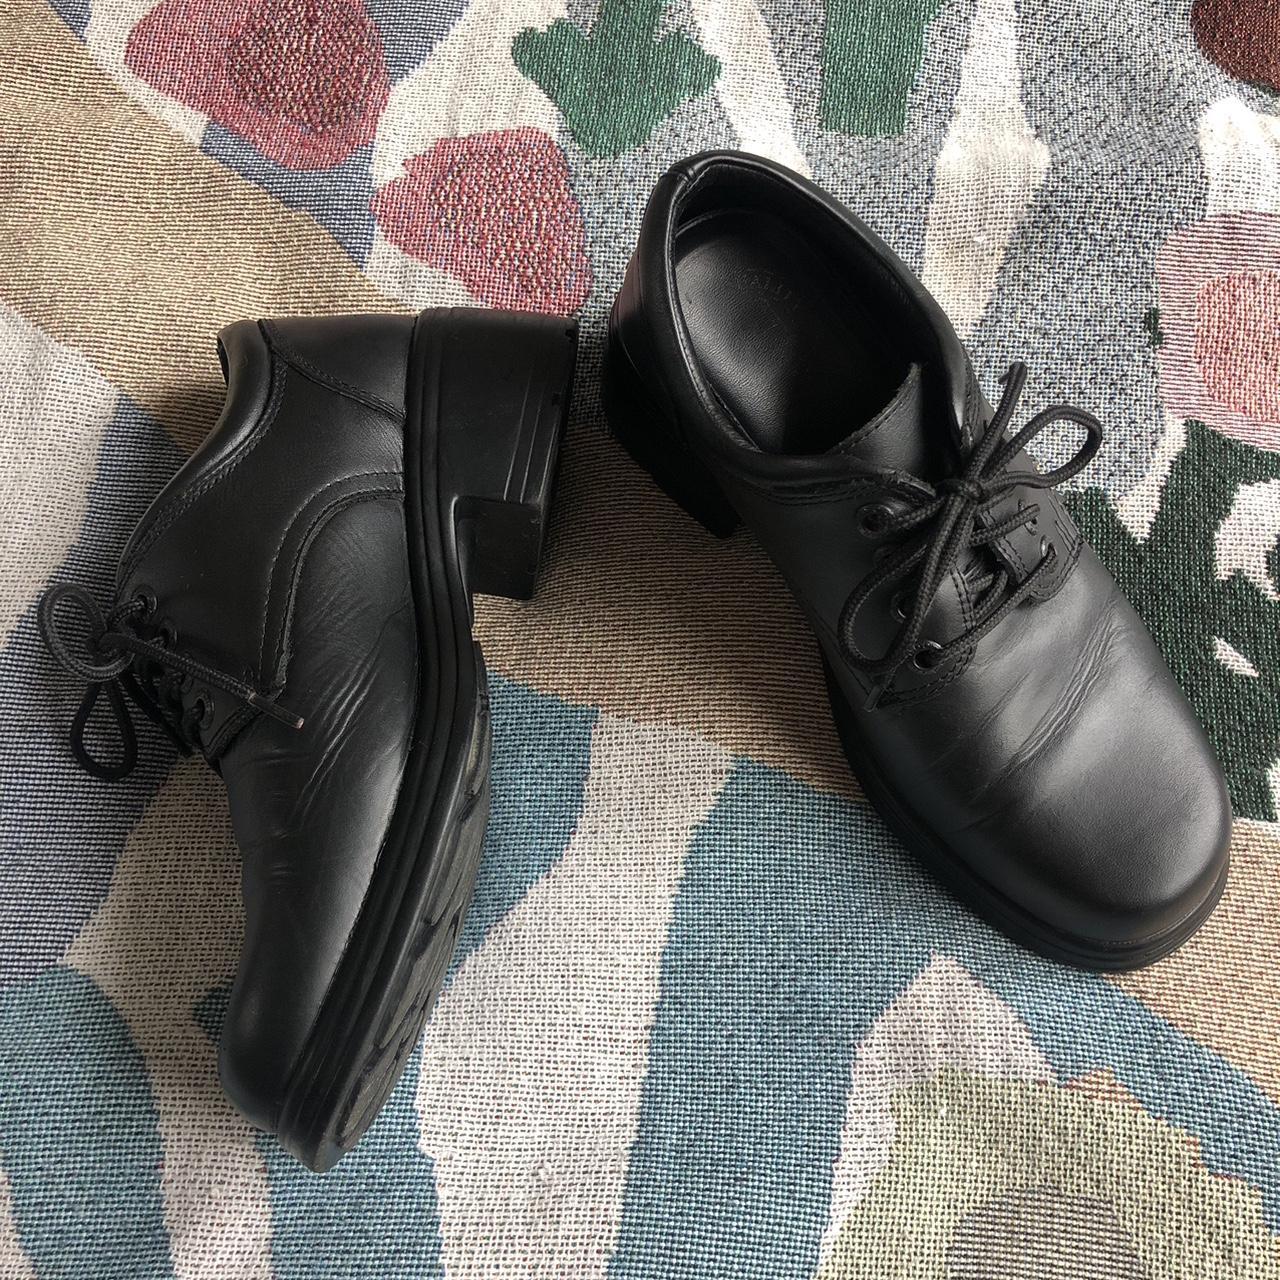 Roc shoes for school/work. Dakota style Size 8.5... - Depop